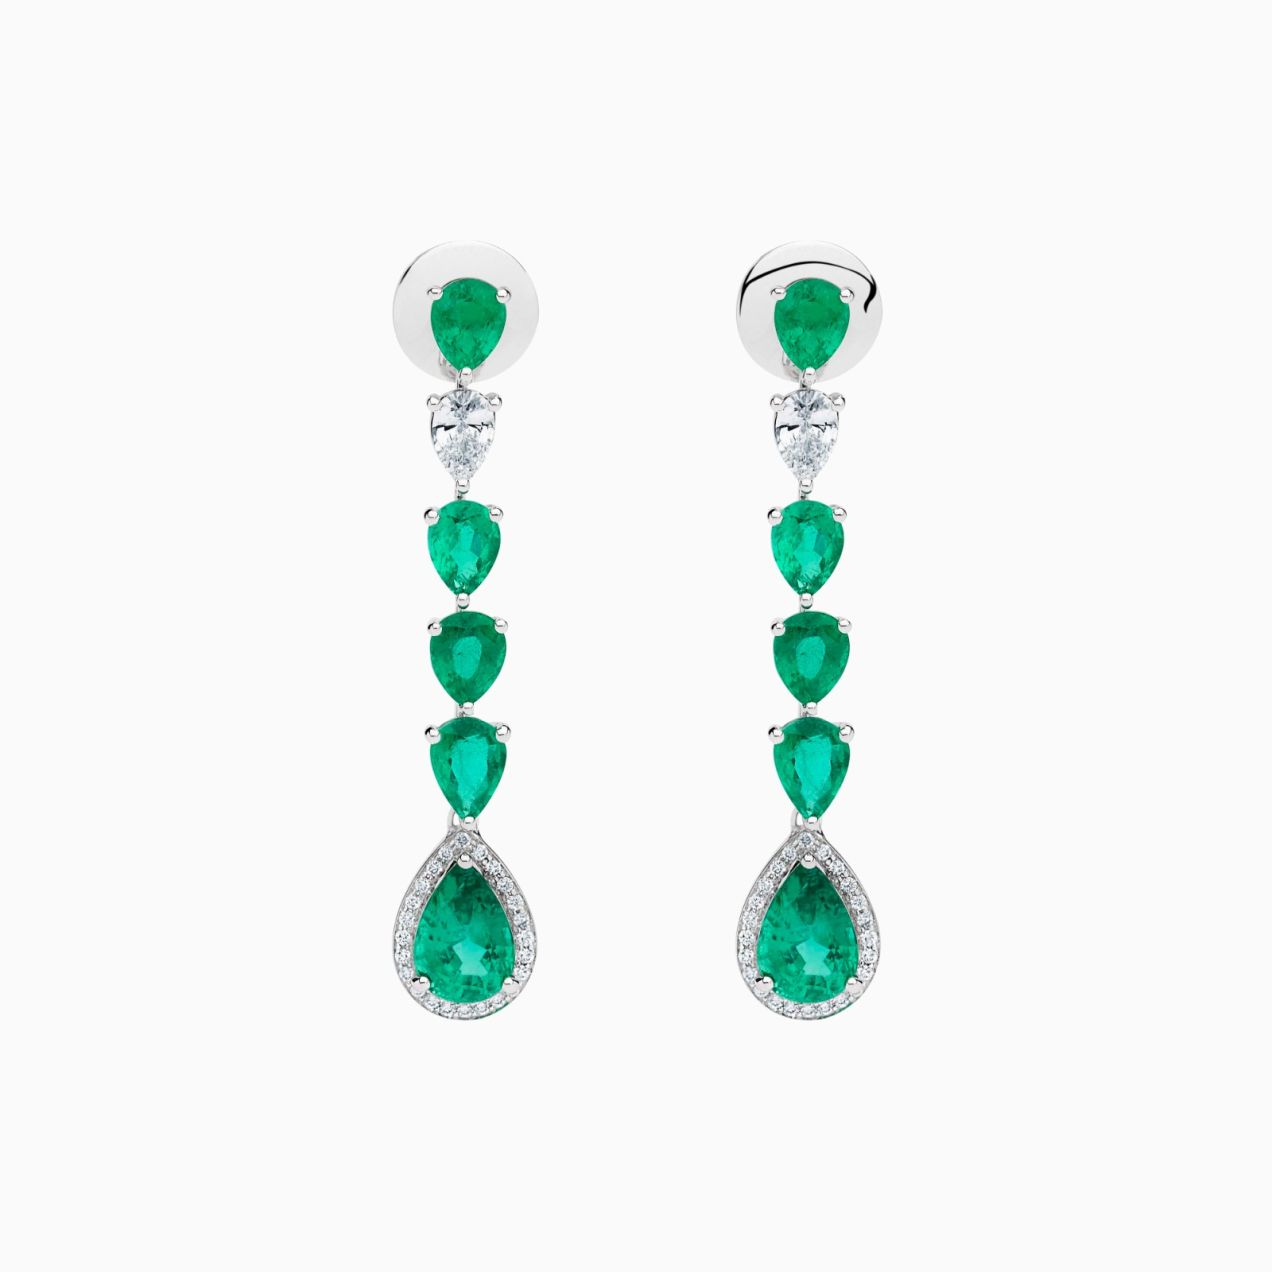 Long earrings of emeralds and diamonds